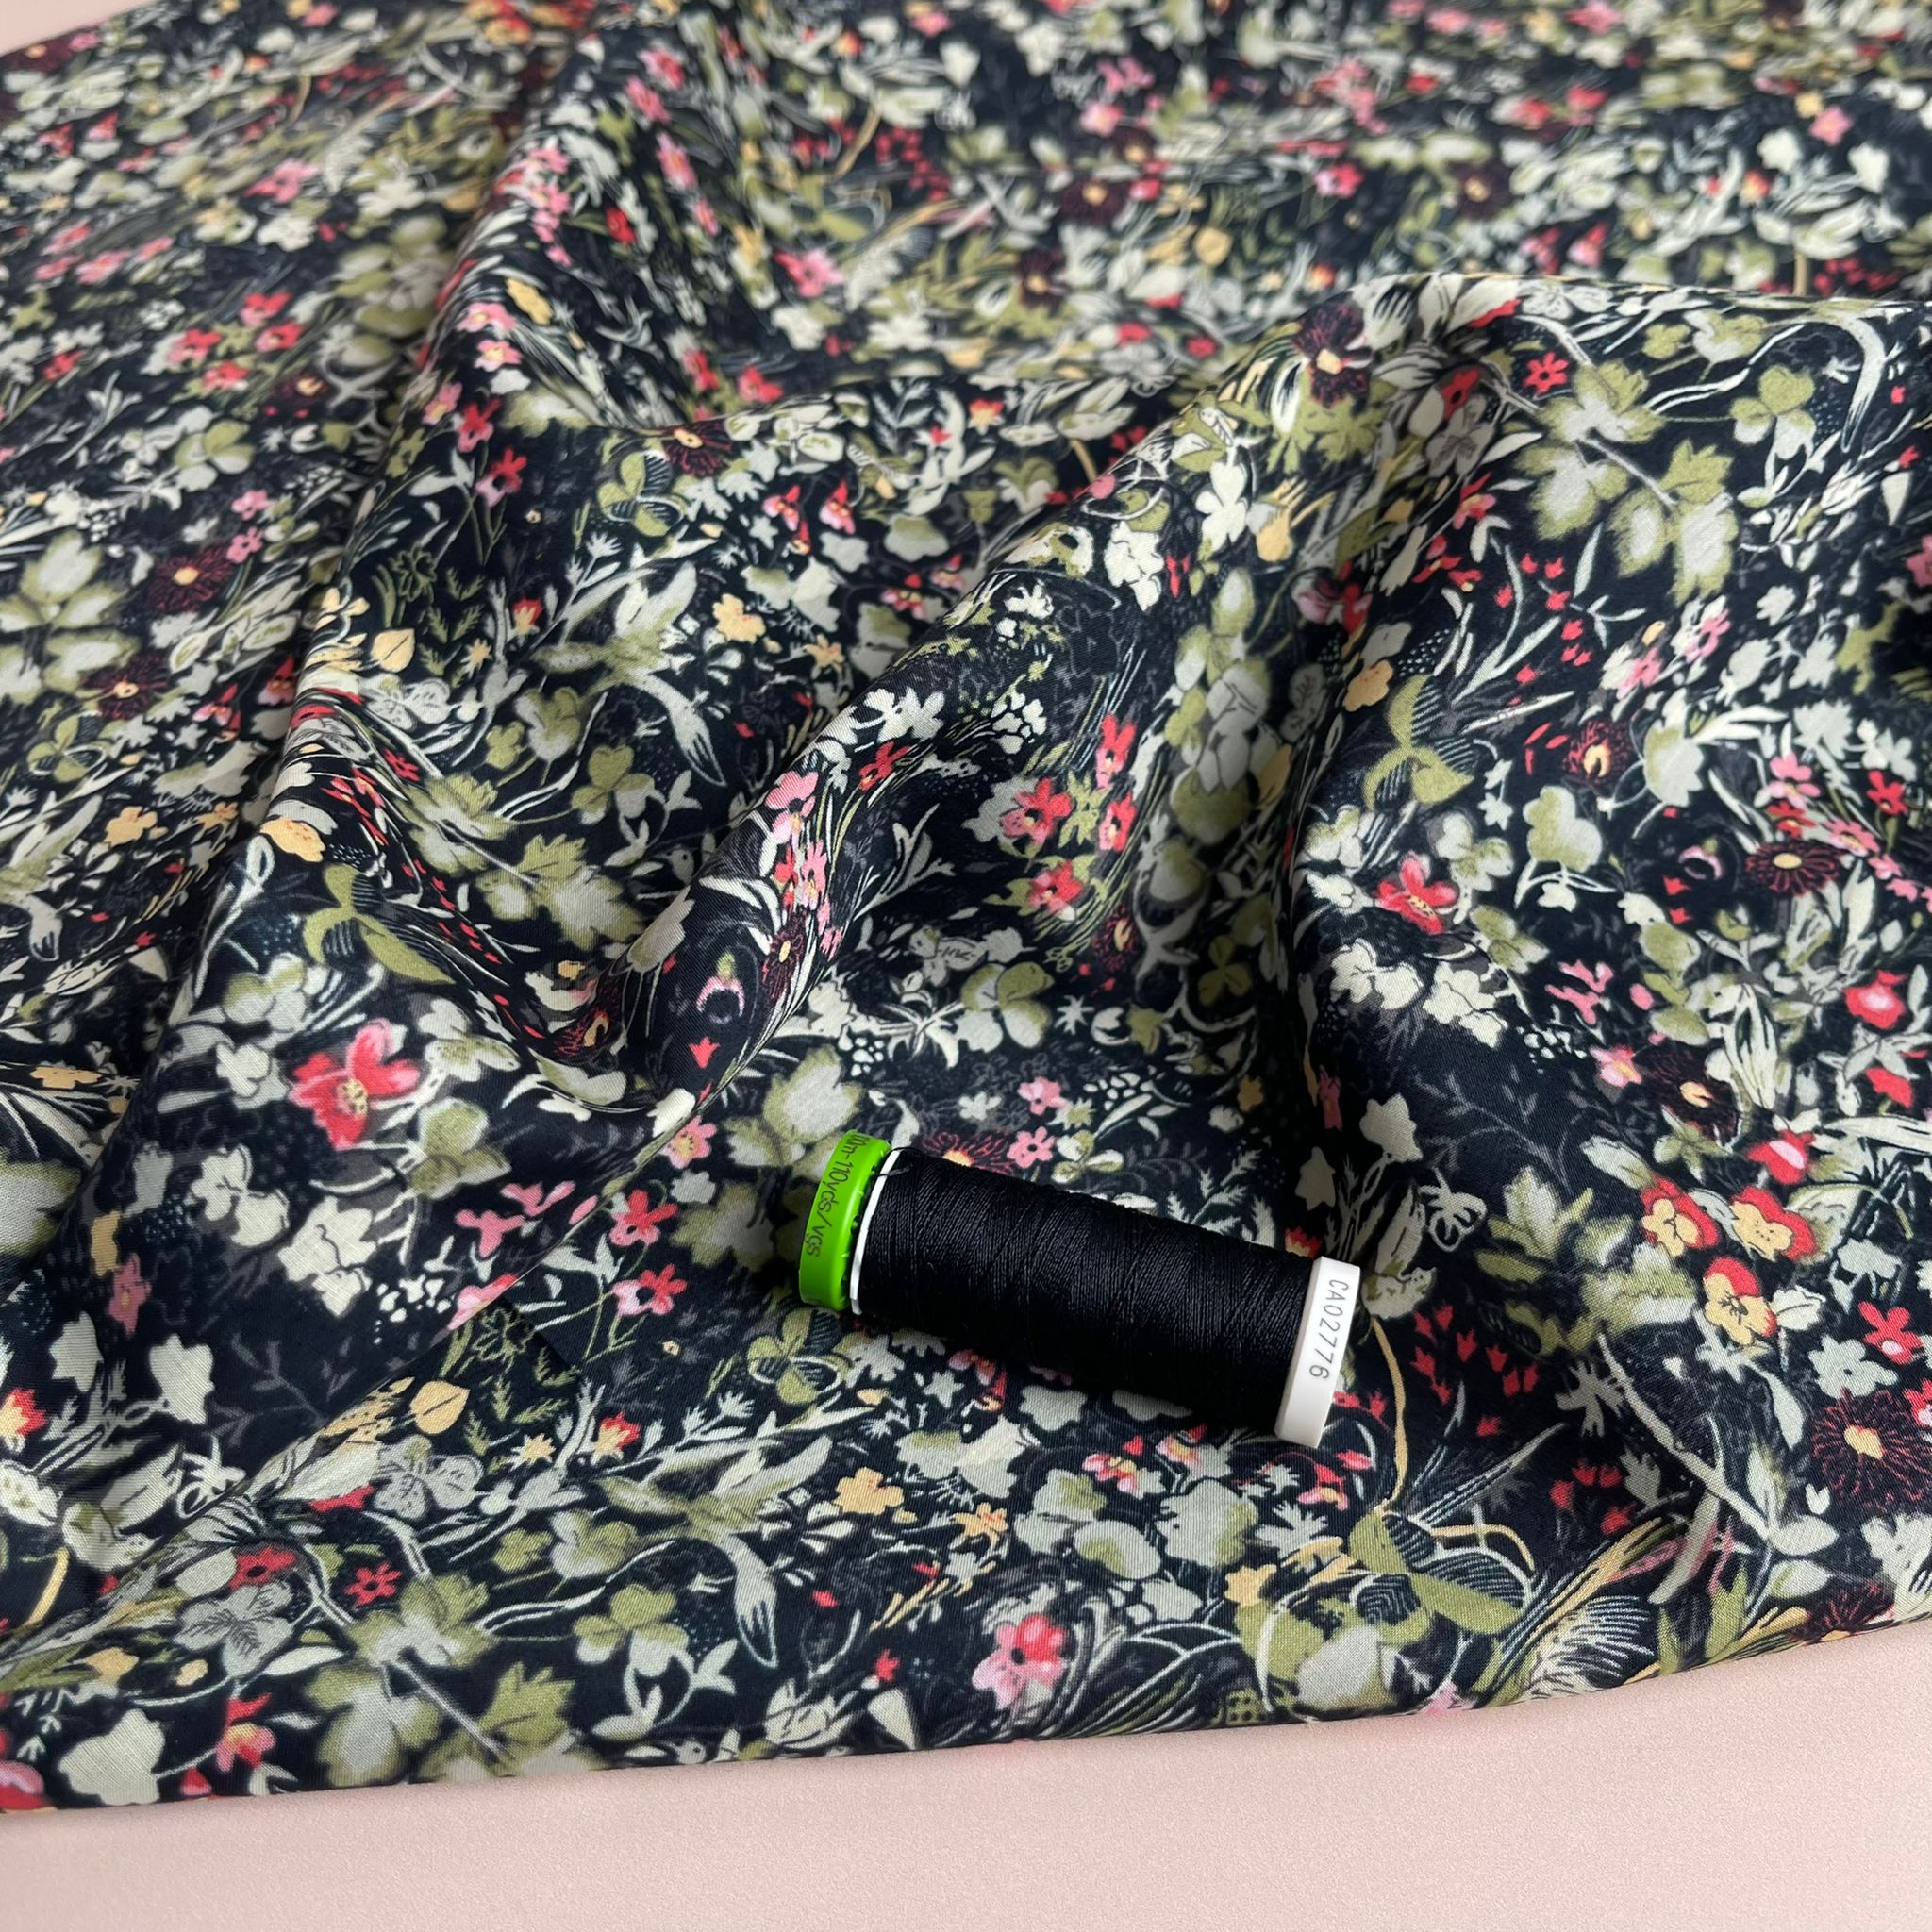 REMNANT 0.54 Metre - Viola Tricolour Night Cotton Lawn Fabric